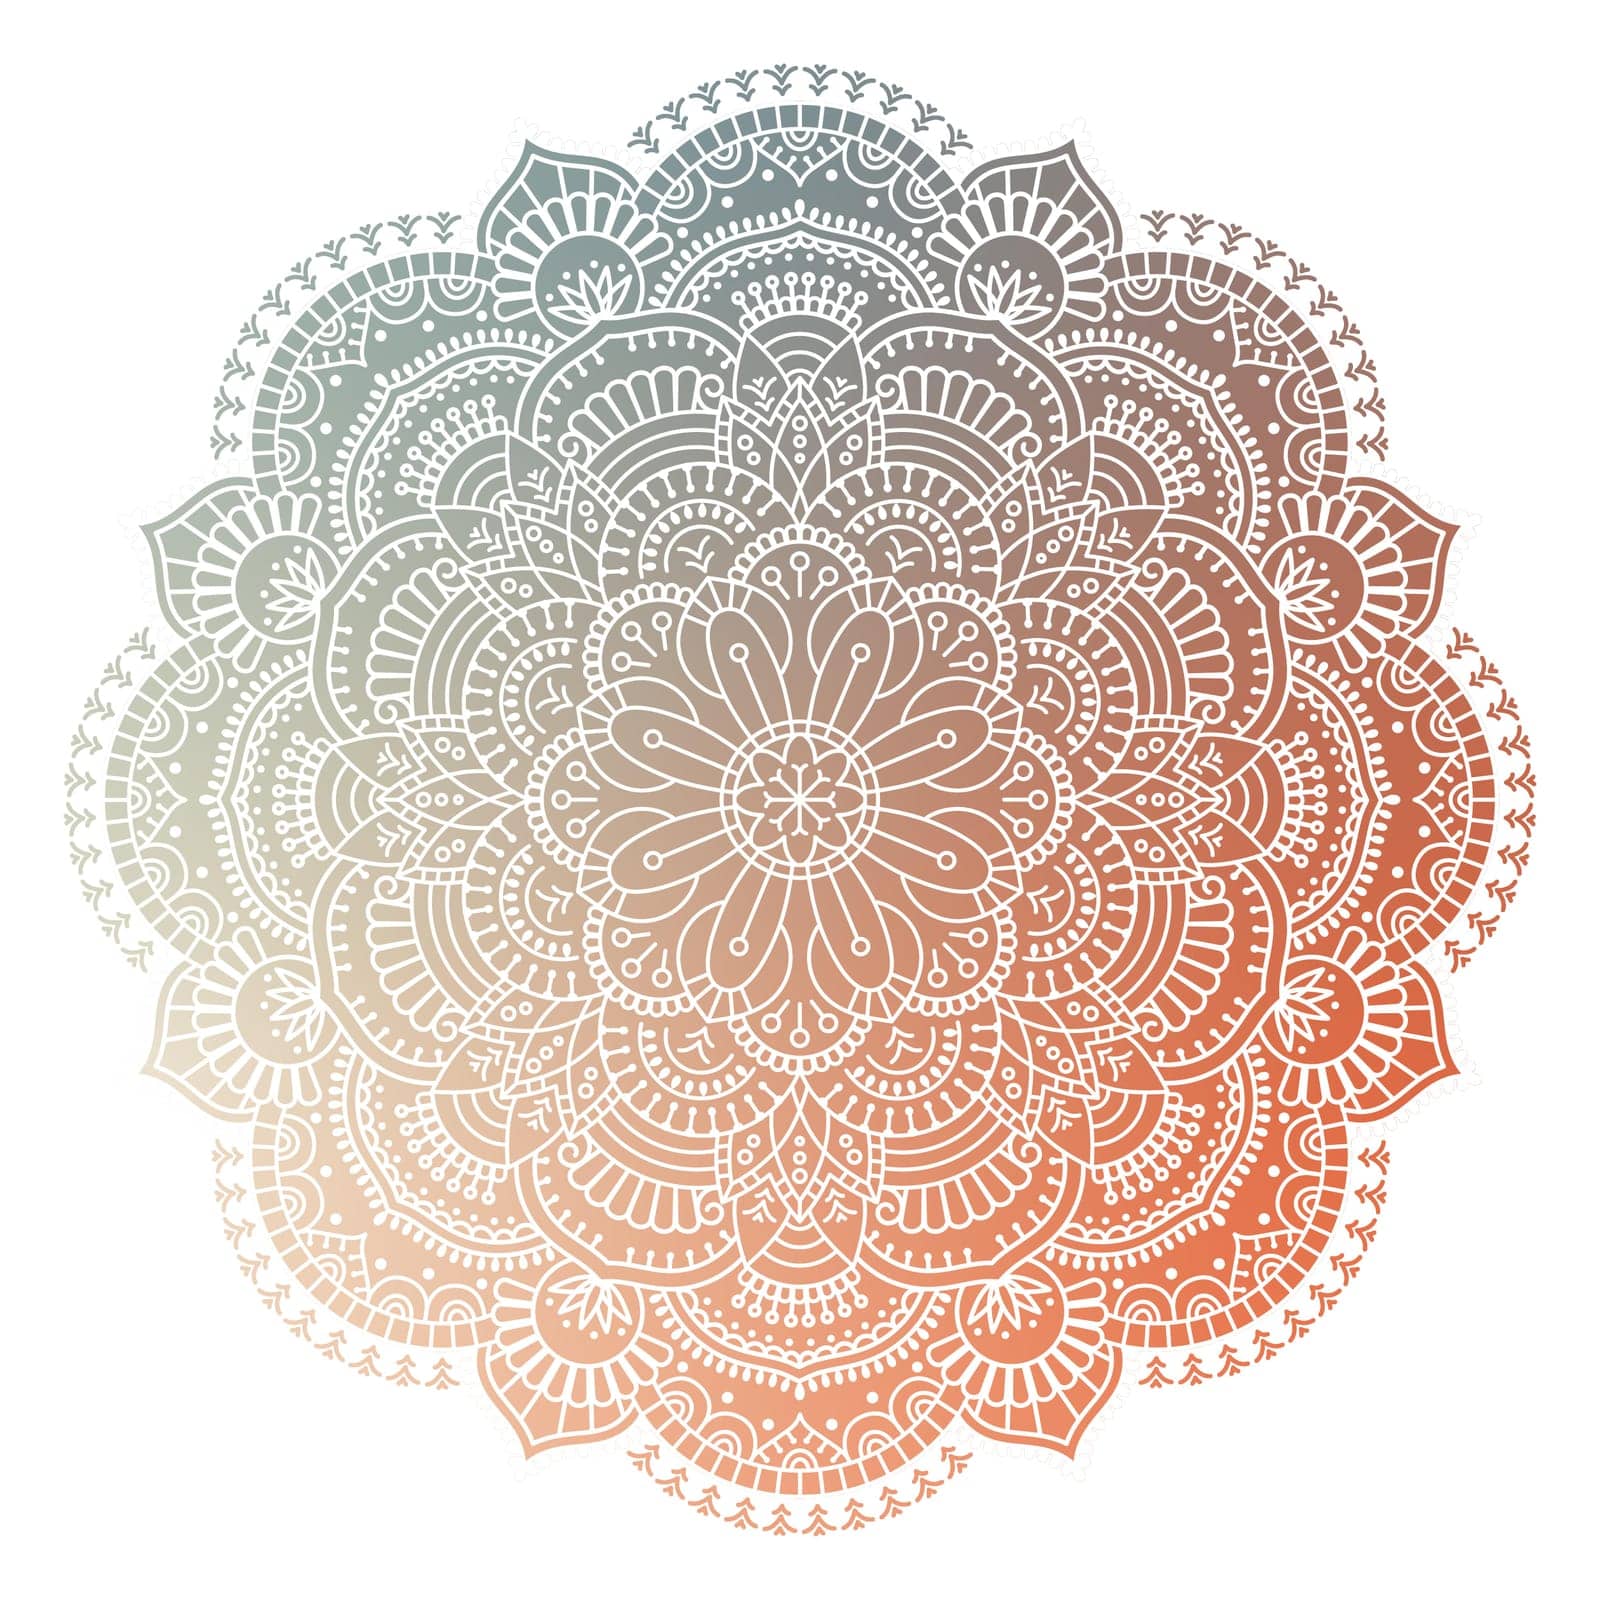 Mandala on white background. Round Ornament Pattern. Indian. Arabic, Islam ornament, Buddhism culture symbol by Olechka